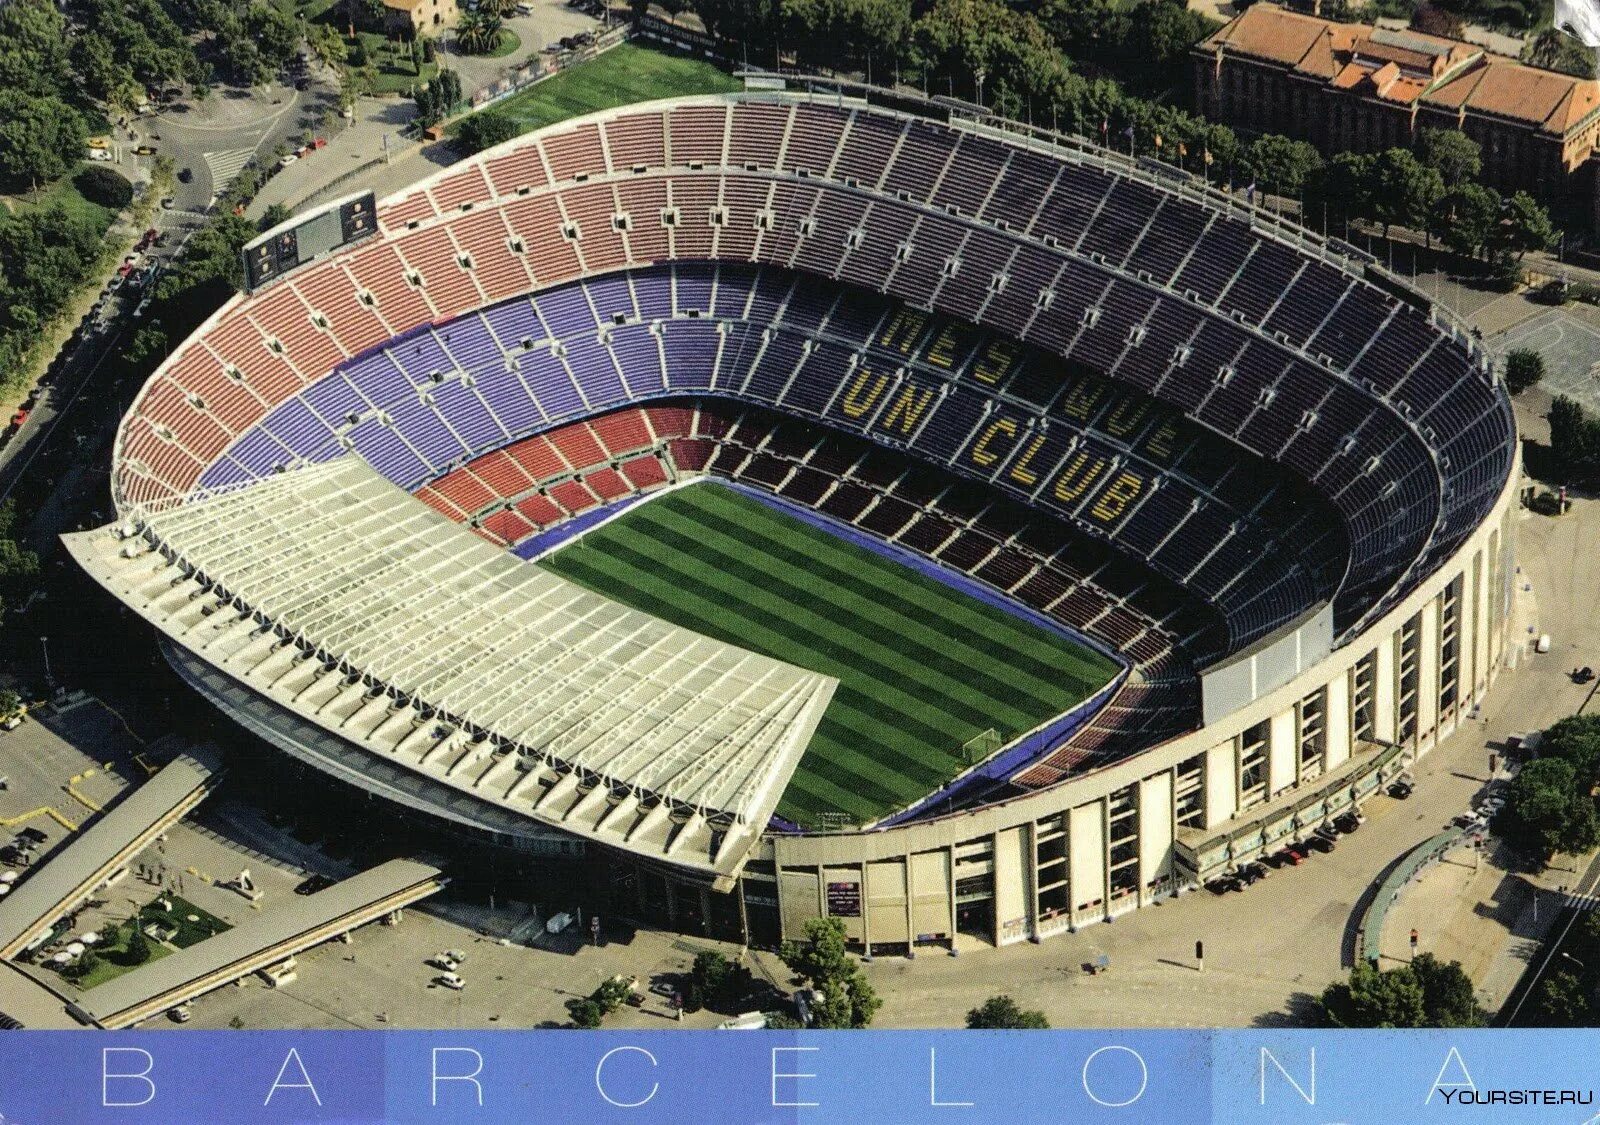 Стадион Camp nou. Барселона Камп ноу. Стадион Барселоны. Камп ноу 1957. Вместимость камп